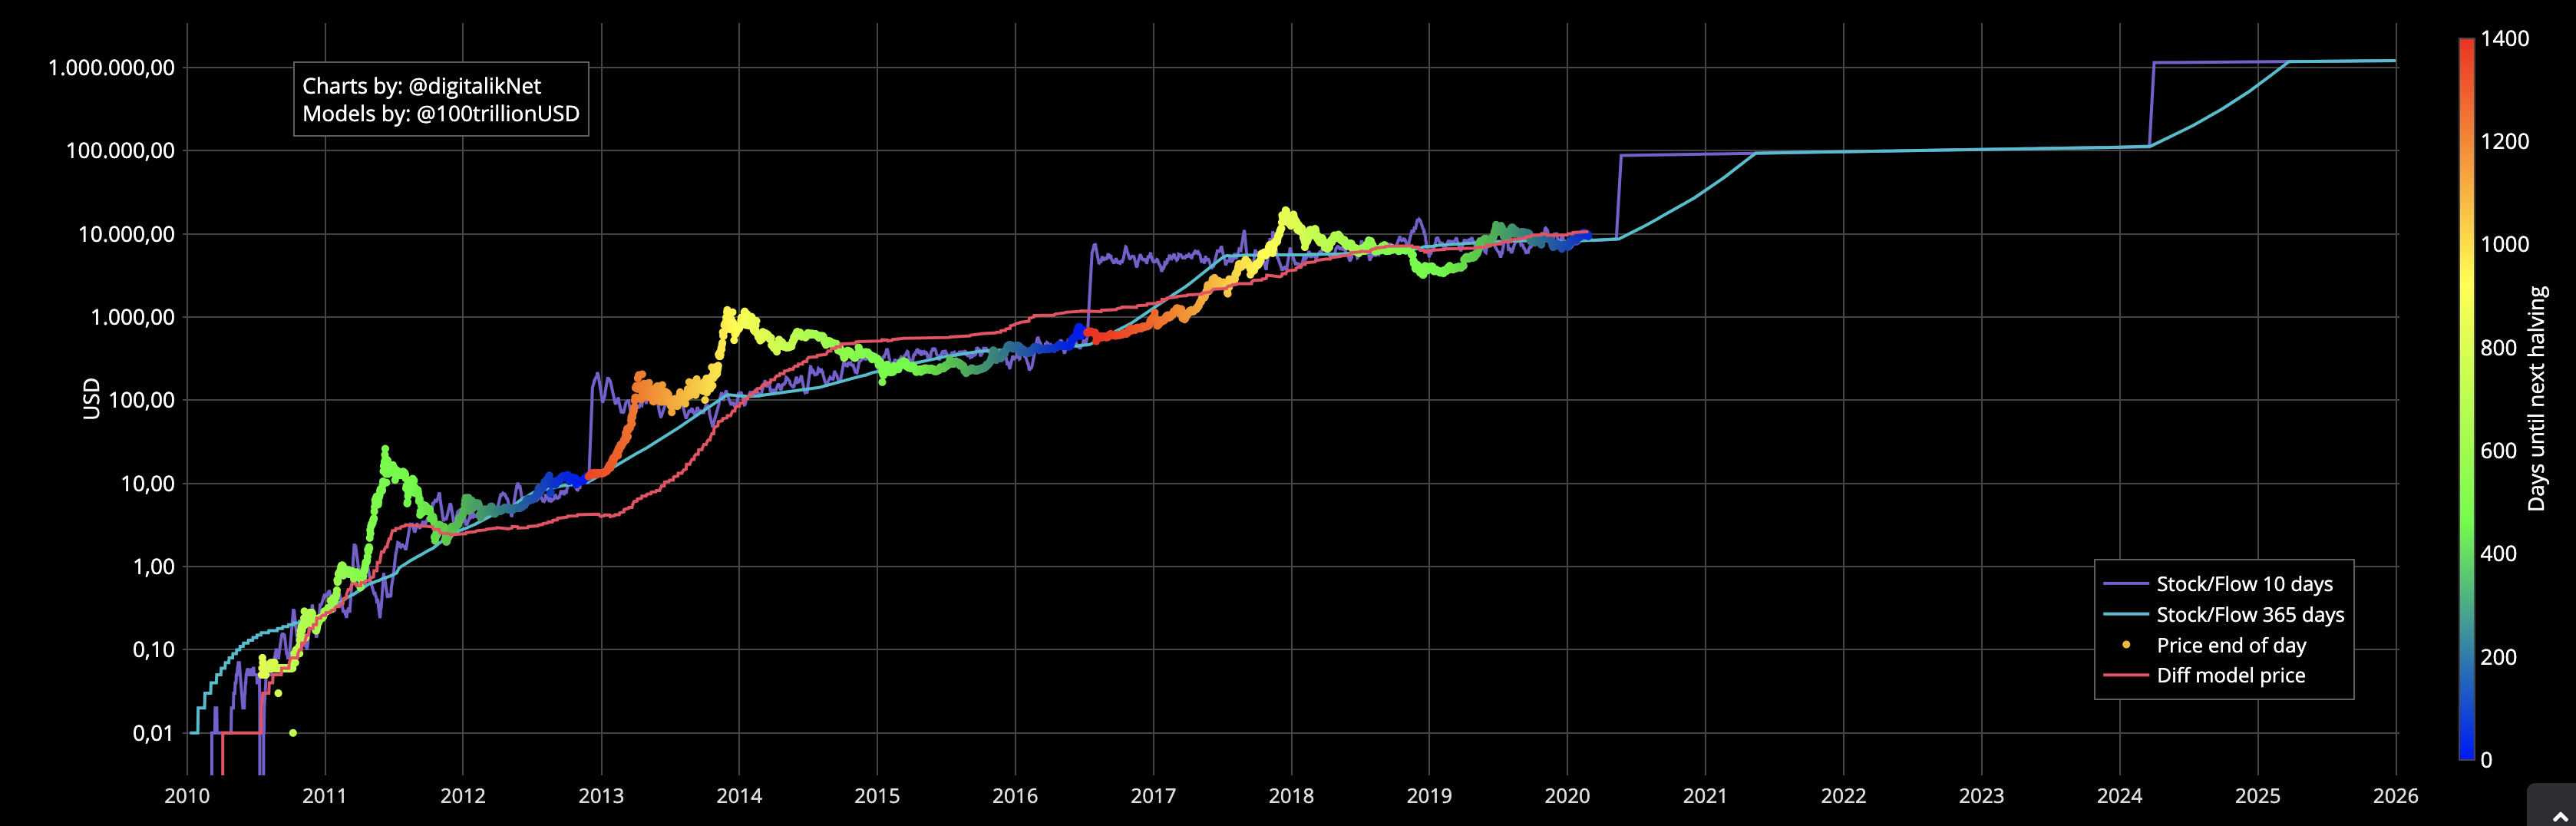 Bitcoin 2020 Price Prediction